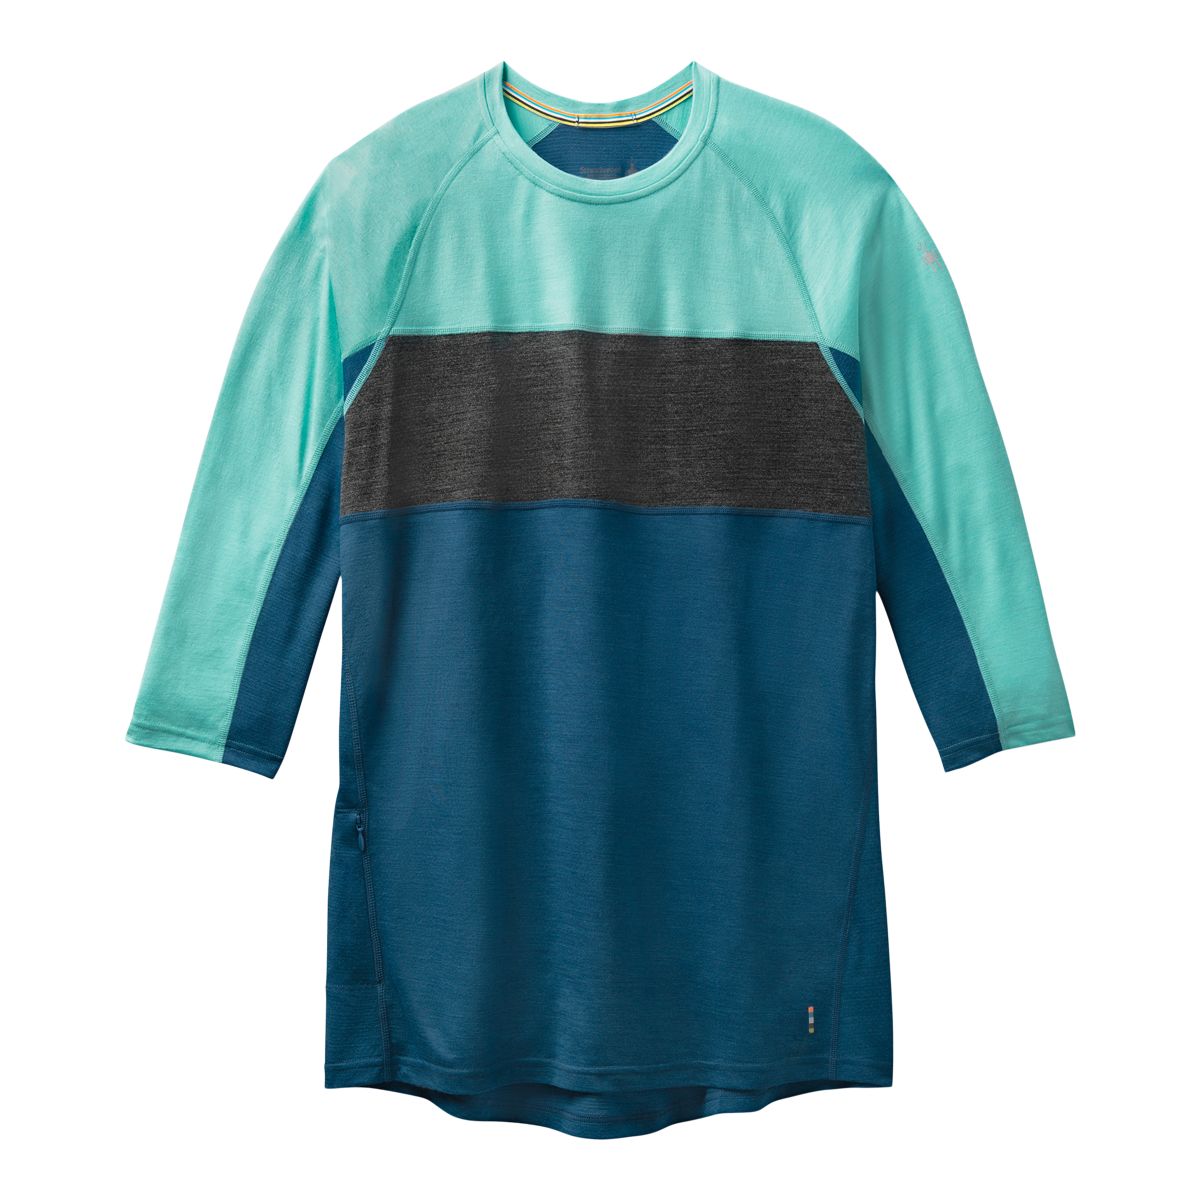 Smartwool Men's Merino 150 3/4 Sleeve T Shirt